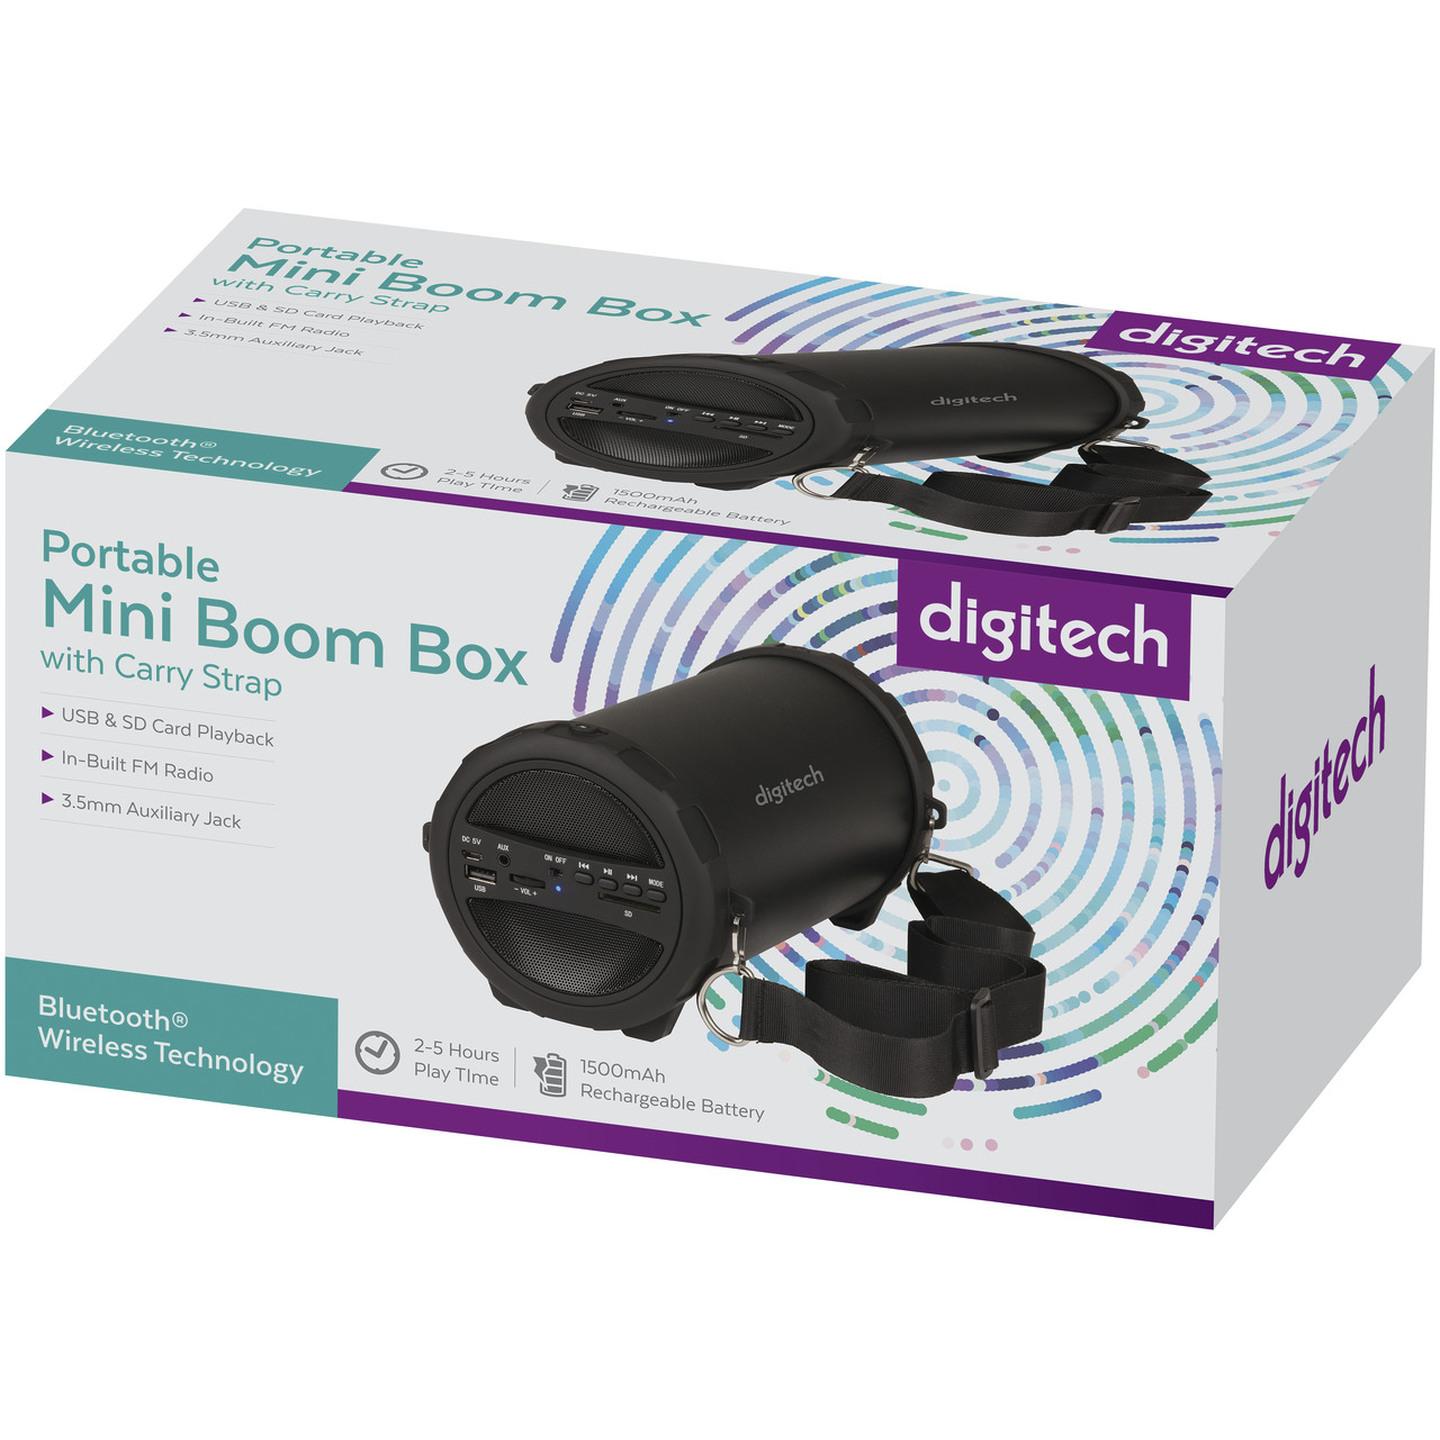 Portable Mini Boom Box with Bluetooth Technology